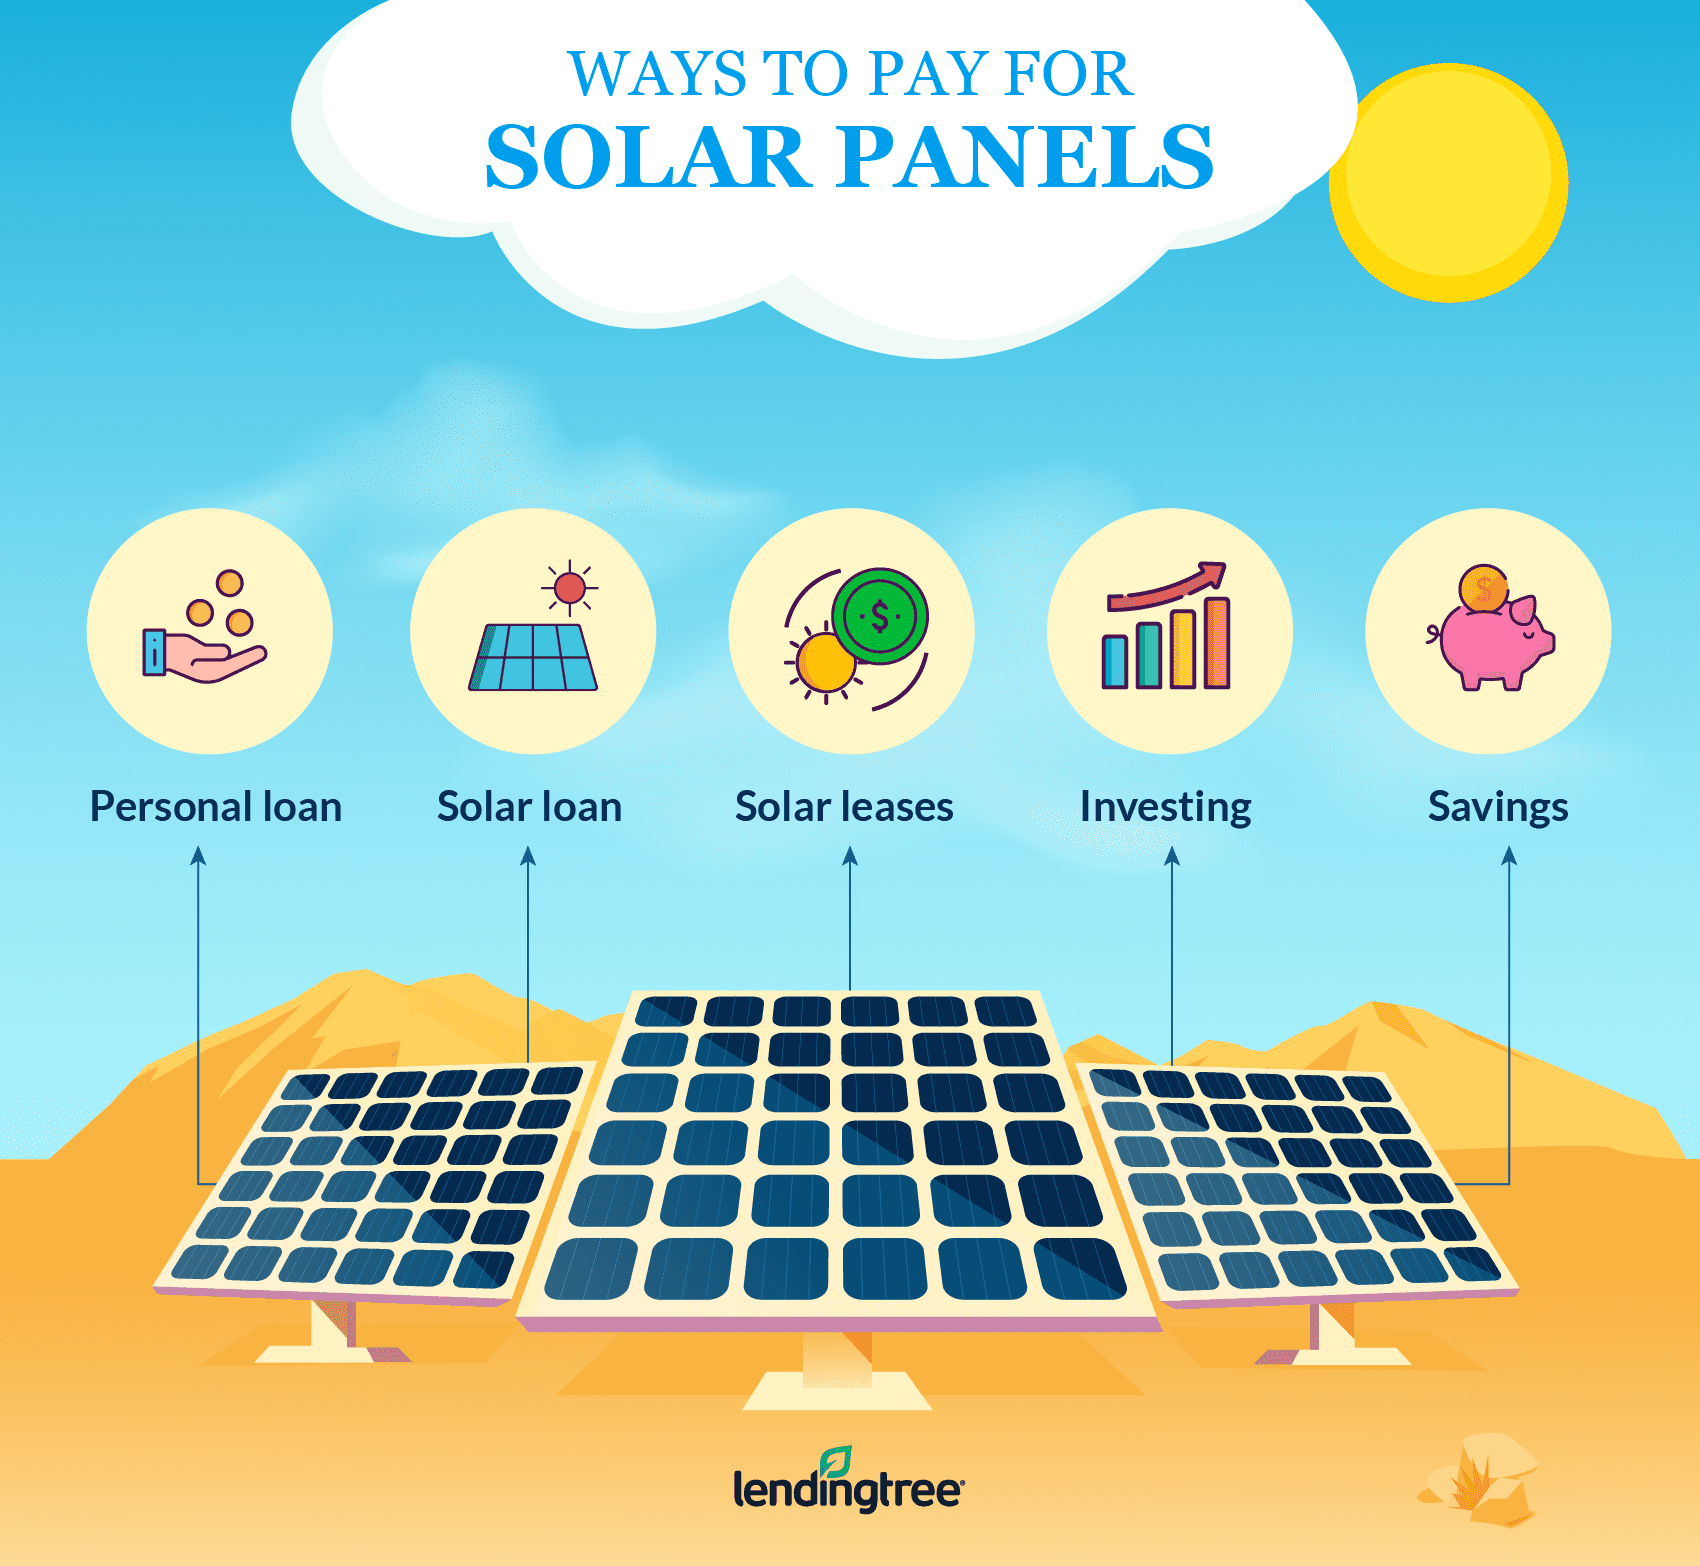 Home Solar Panels: 5 Best Ways to Finance